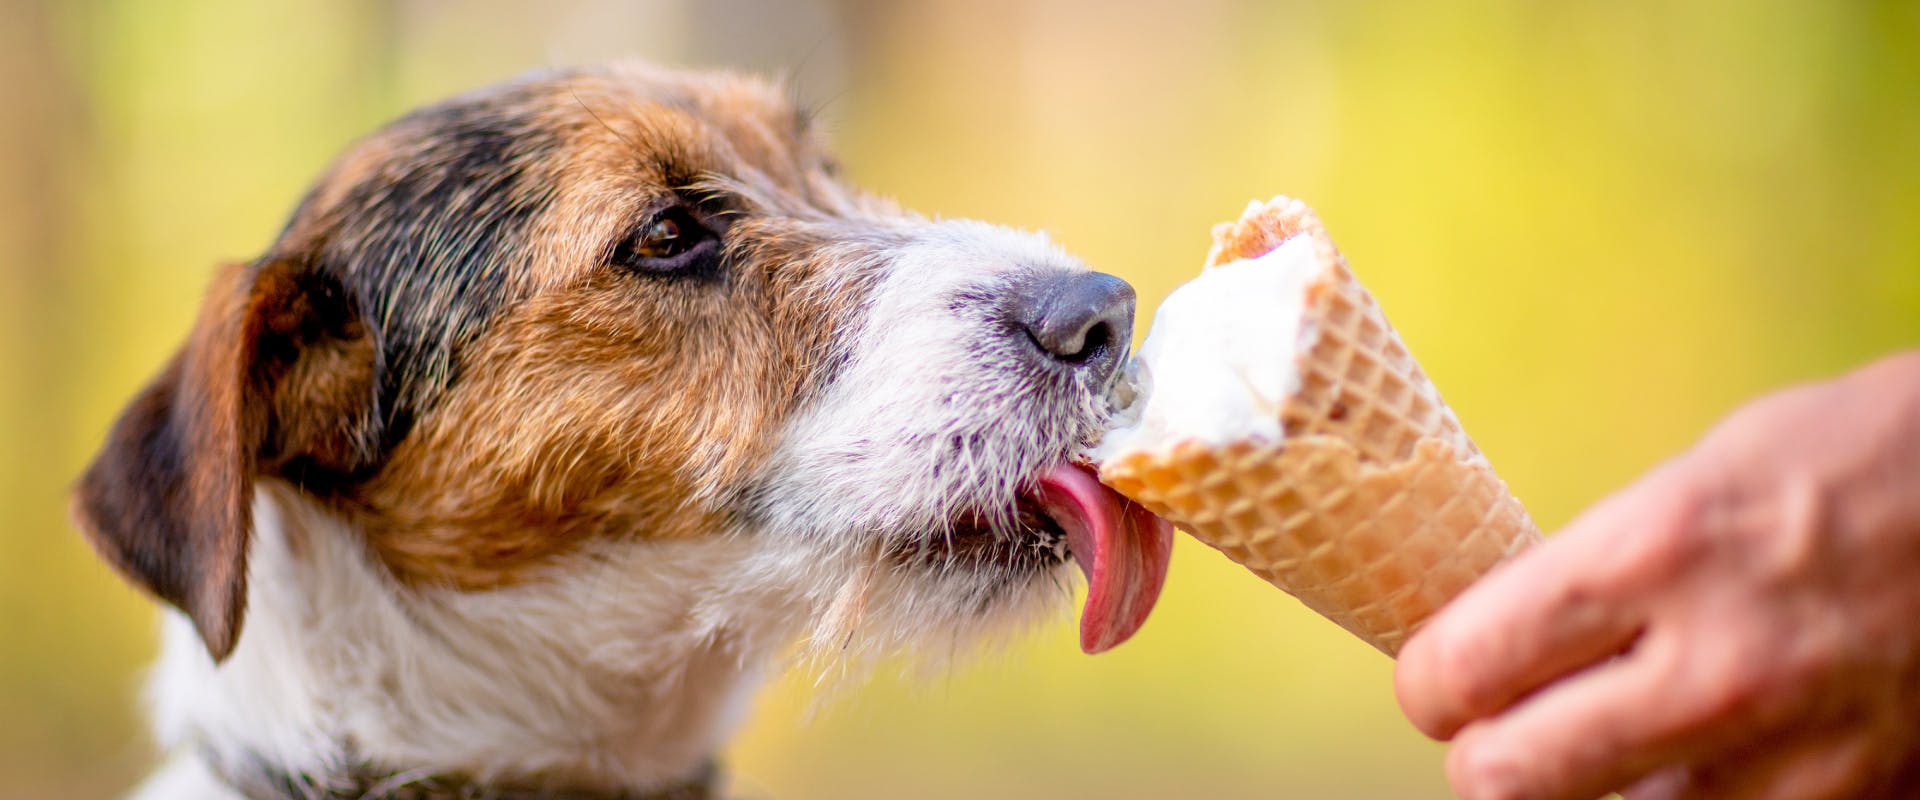 A dog licks an ice cream in a cone.